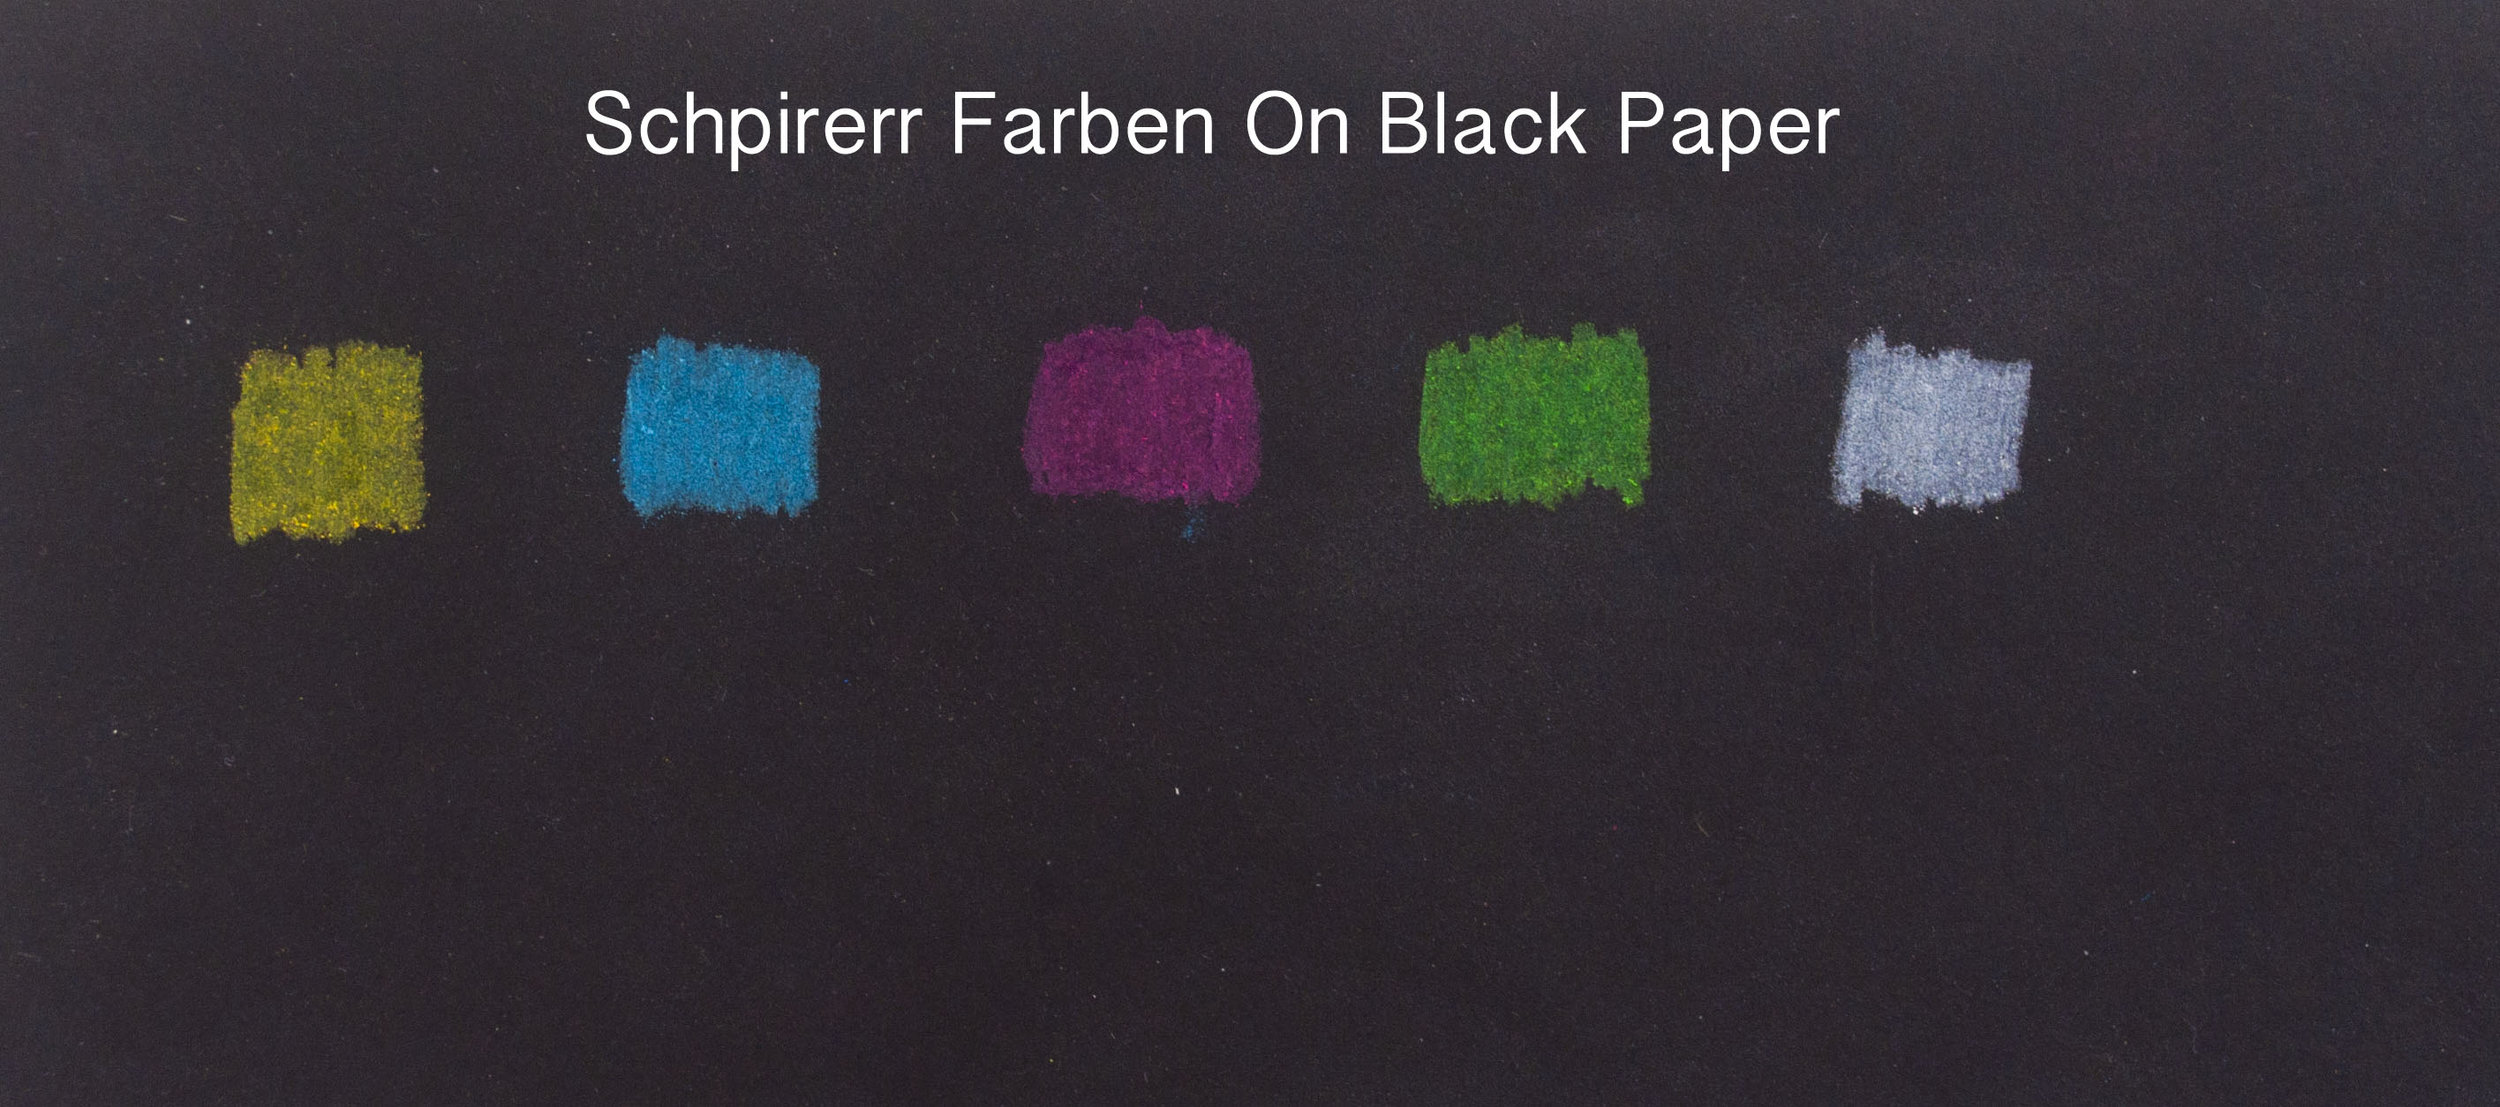 SCHPIRERR FARBEN - Premium Colored Pencils, Oil-Based Coloring Pencils,  Soft-Core Color Pencil Set for Adults & Children, Non-Toxic Colored Pencil  for